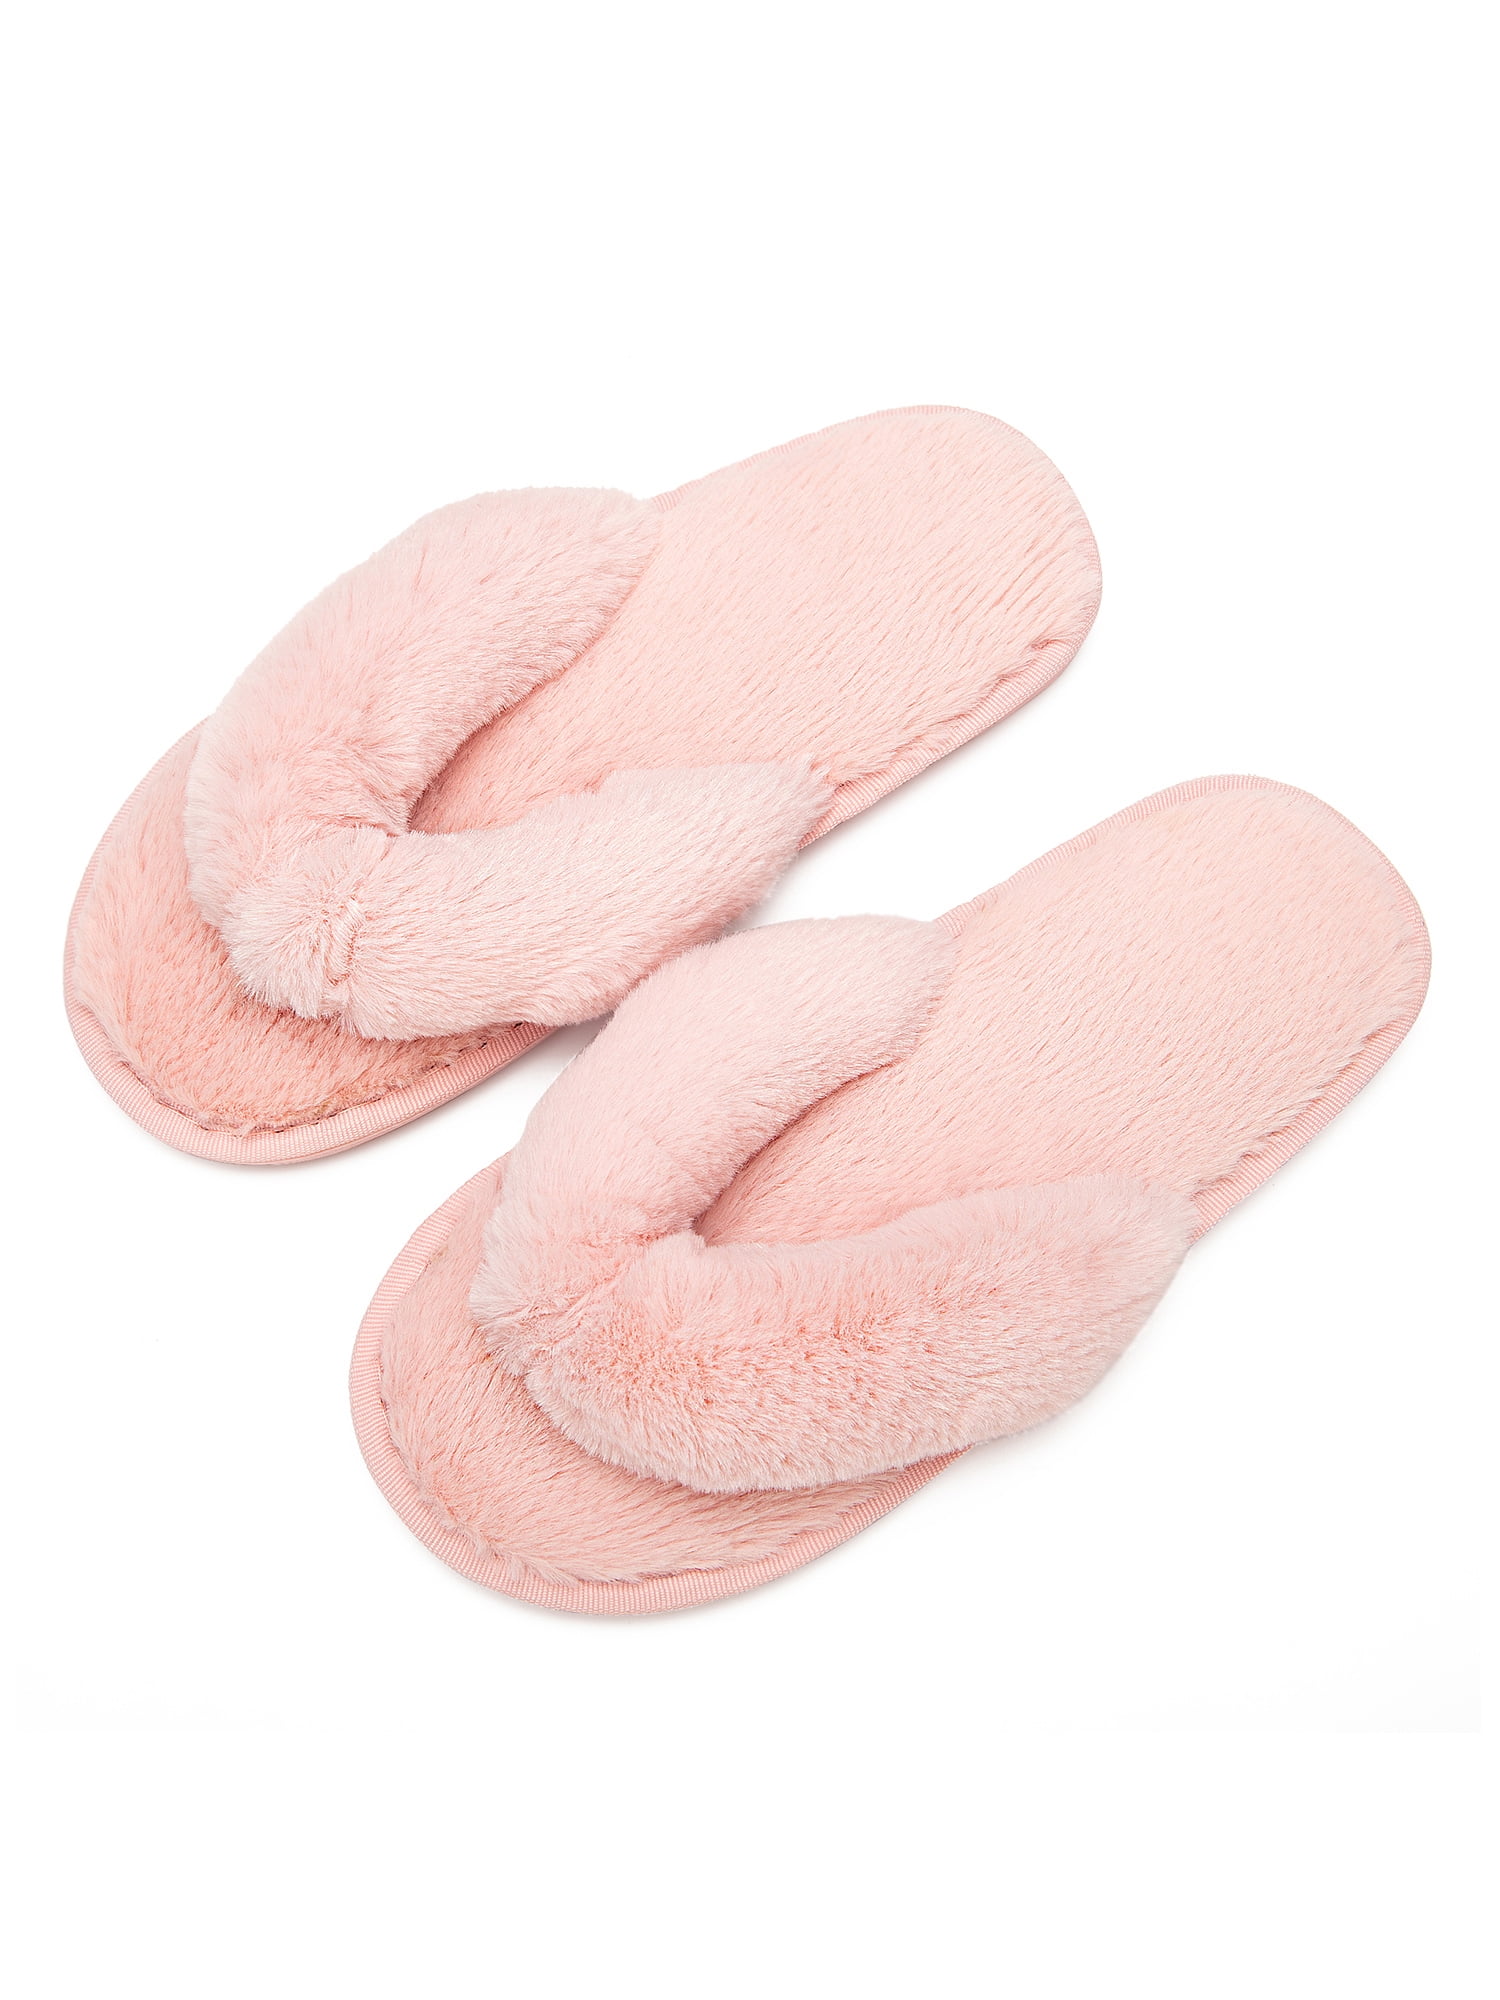 Slippers Women Winter Warm Plush Flip Flops Cotton Indoor Home Shoes 1 pair 